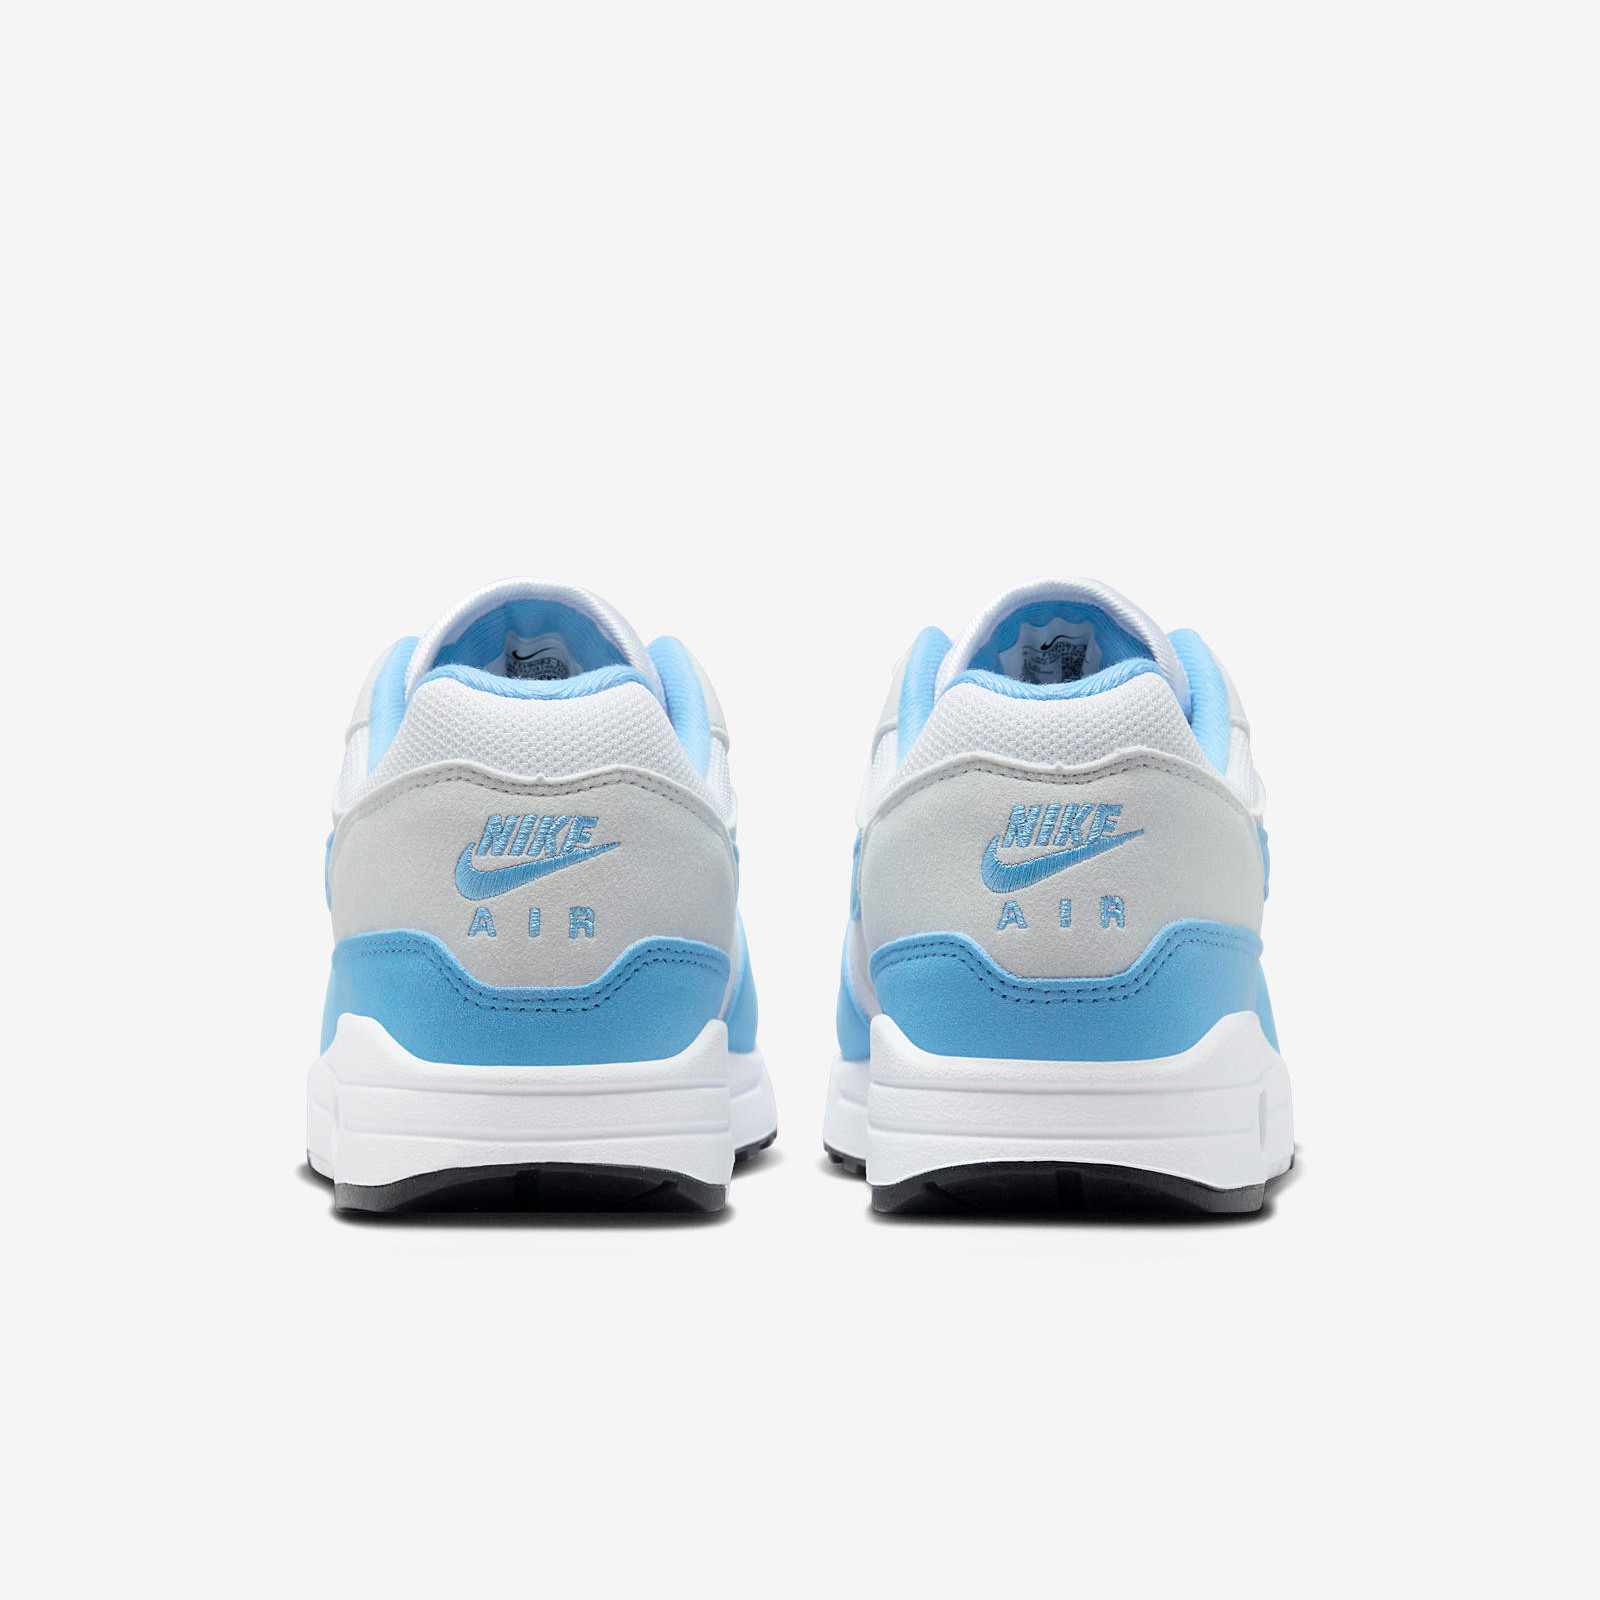 Nike Air Max 1
« University Blue »